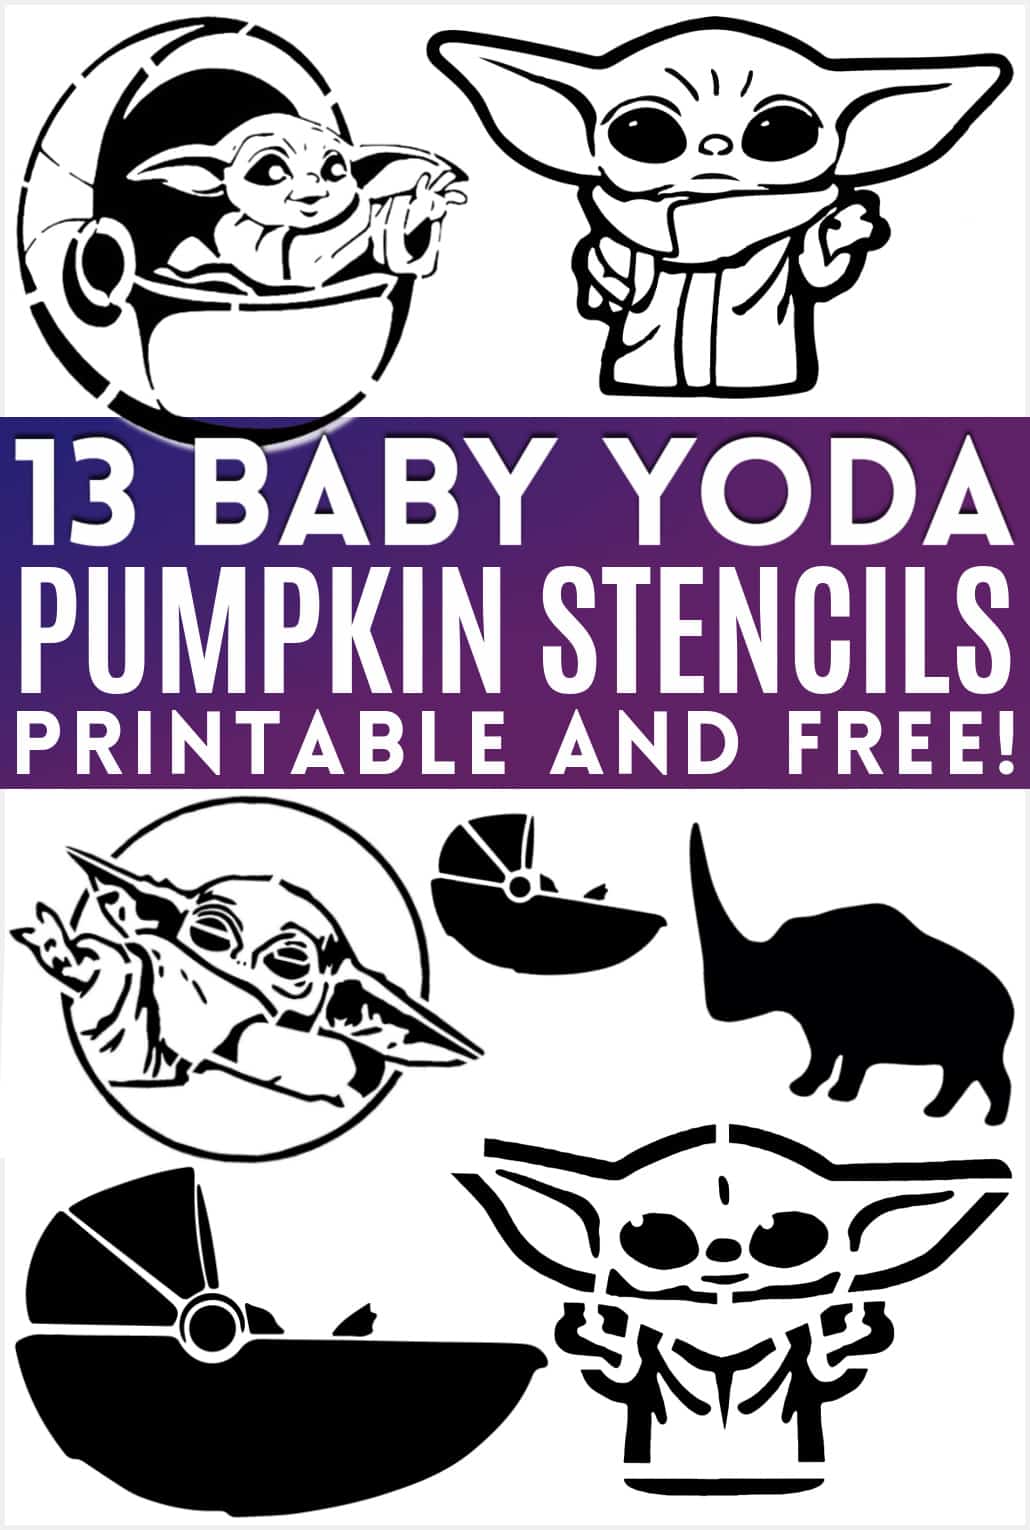 Baby yoda pumpkin stencils images on a white background